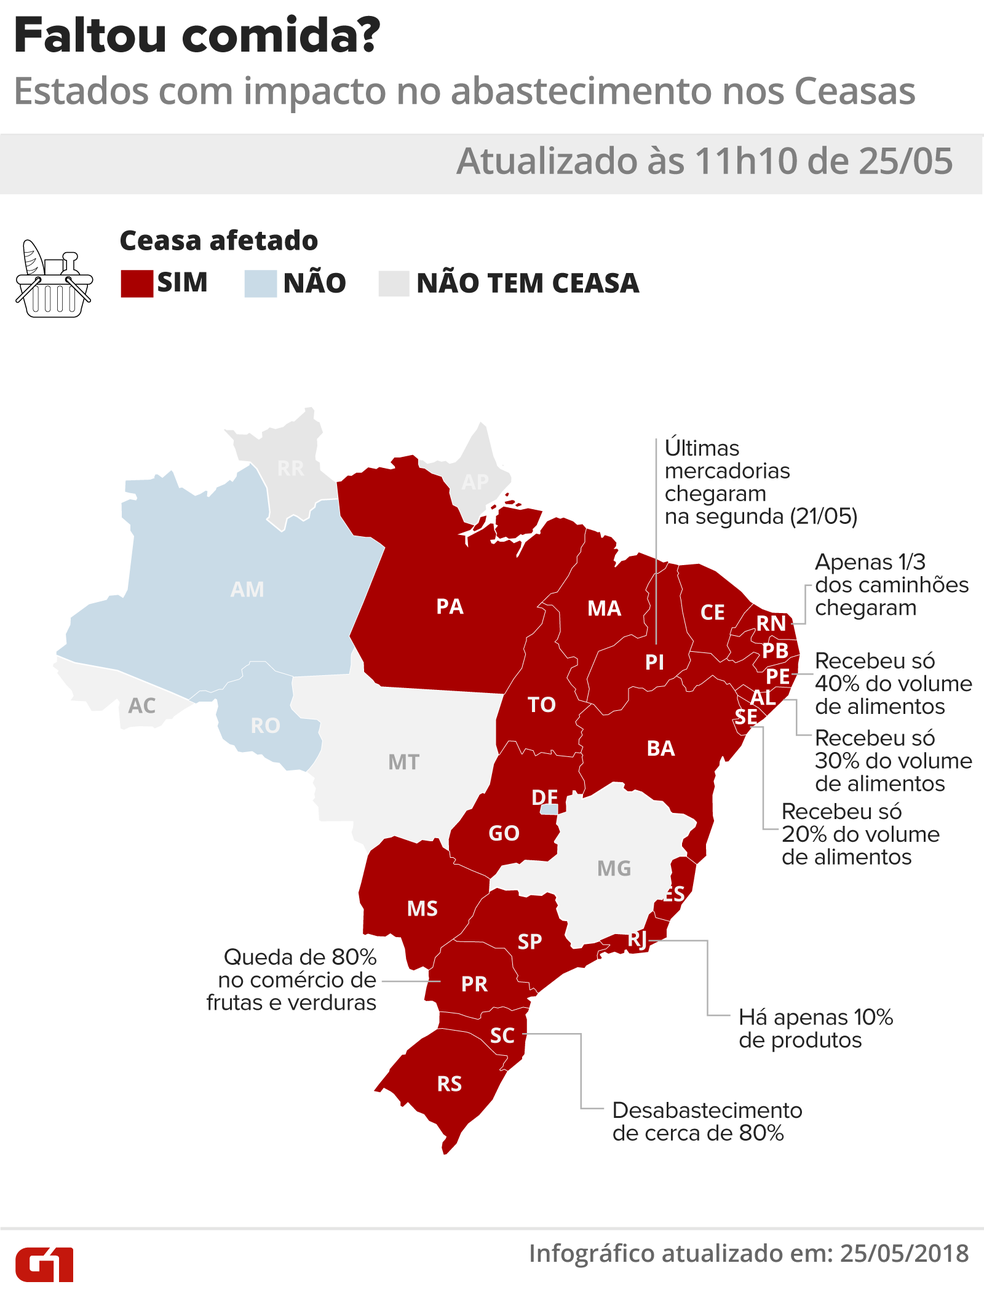 11h10 - Mapa dos estados onde houve impacto no abastecimentos dos Ceasa (Foto: Karina Almeida e Juliane Souza/G1)